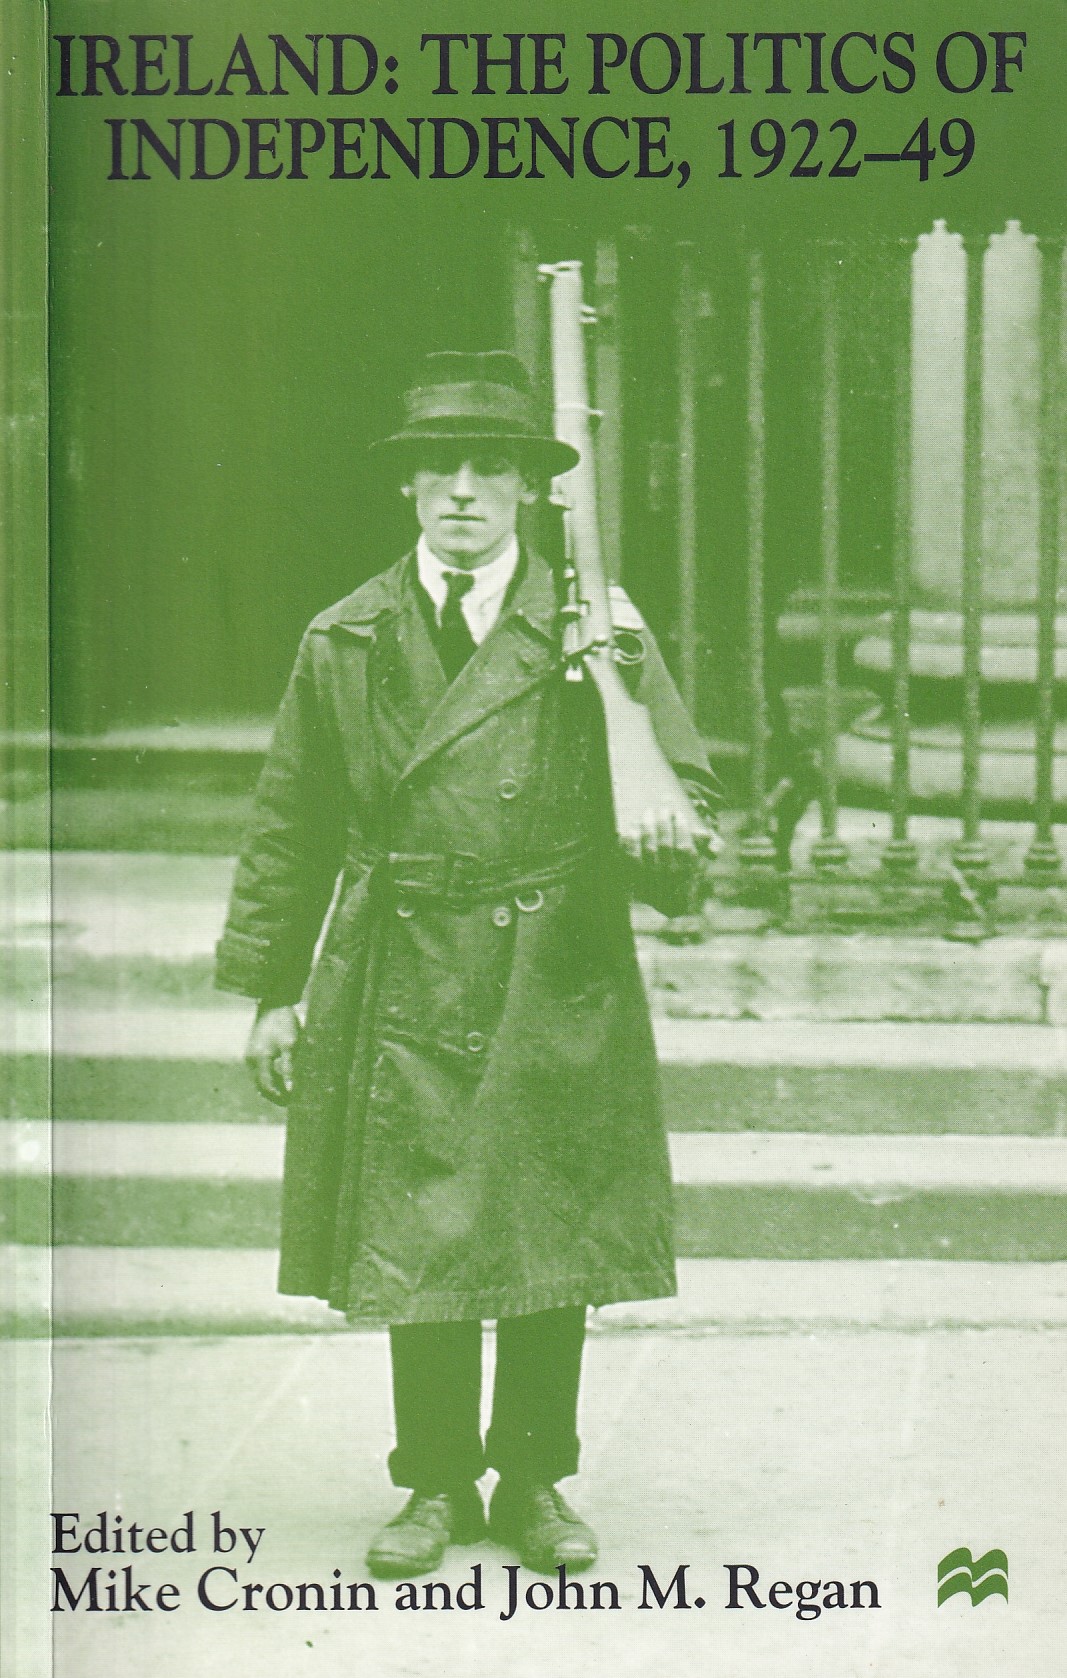 Ireland: The Politics of Independence, 1922-49 | Mike Cronin & John M. Regan (eds.) | Charlie Byrne's